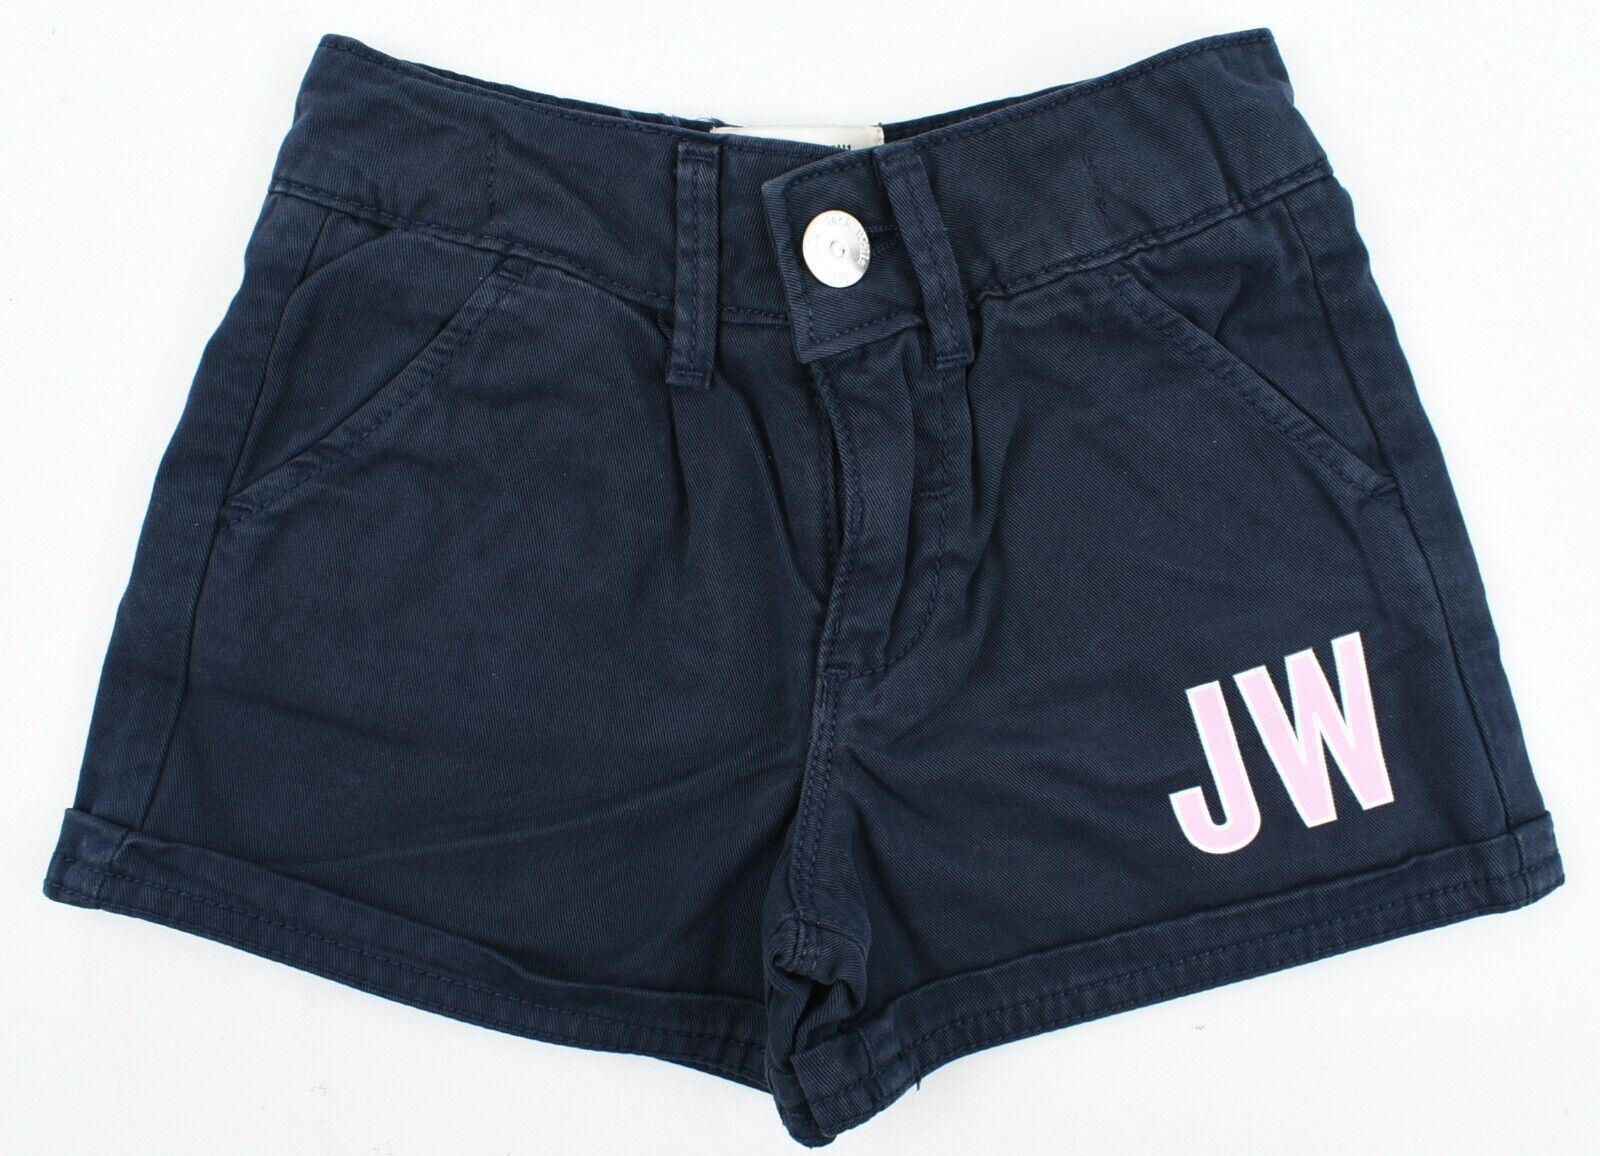 JACK WILLS Girls Kids Summer Shorts, Navy Blue, size 3-4 Years